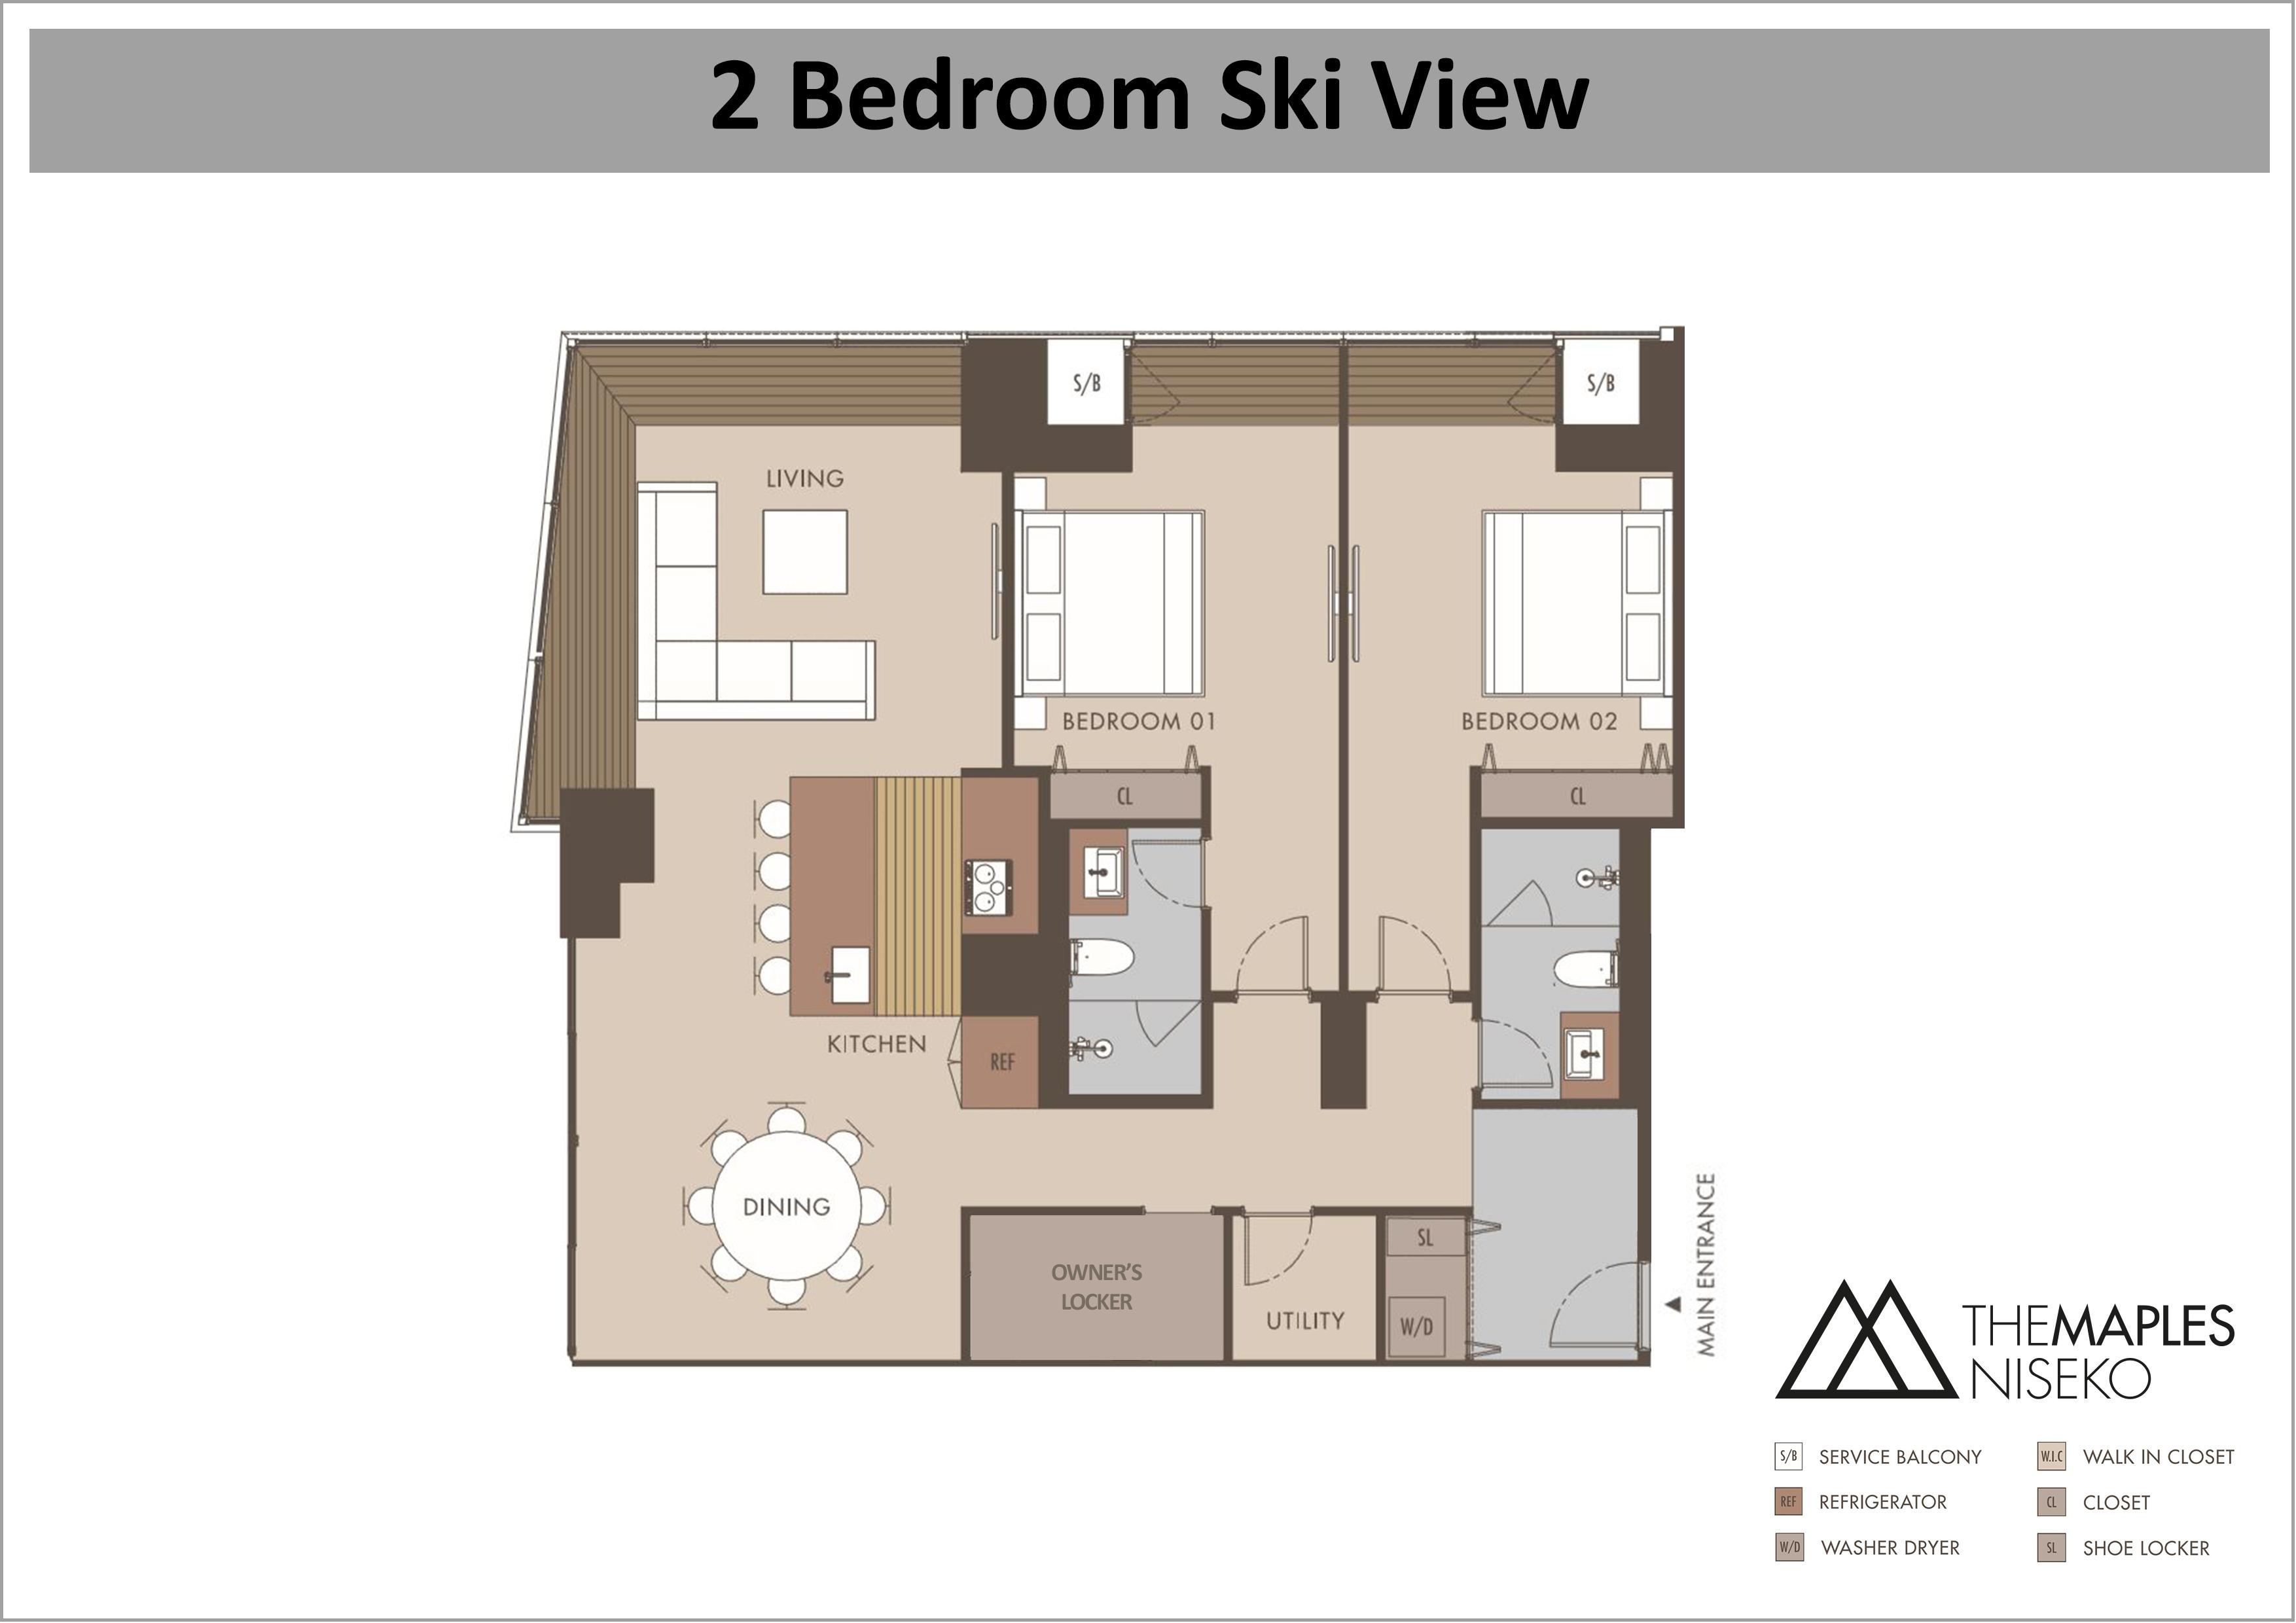 The Maples - 2 Bedroom Ski View floor plan